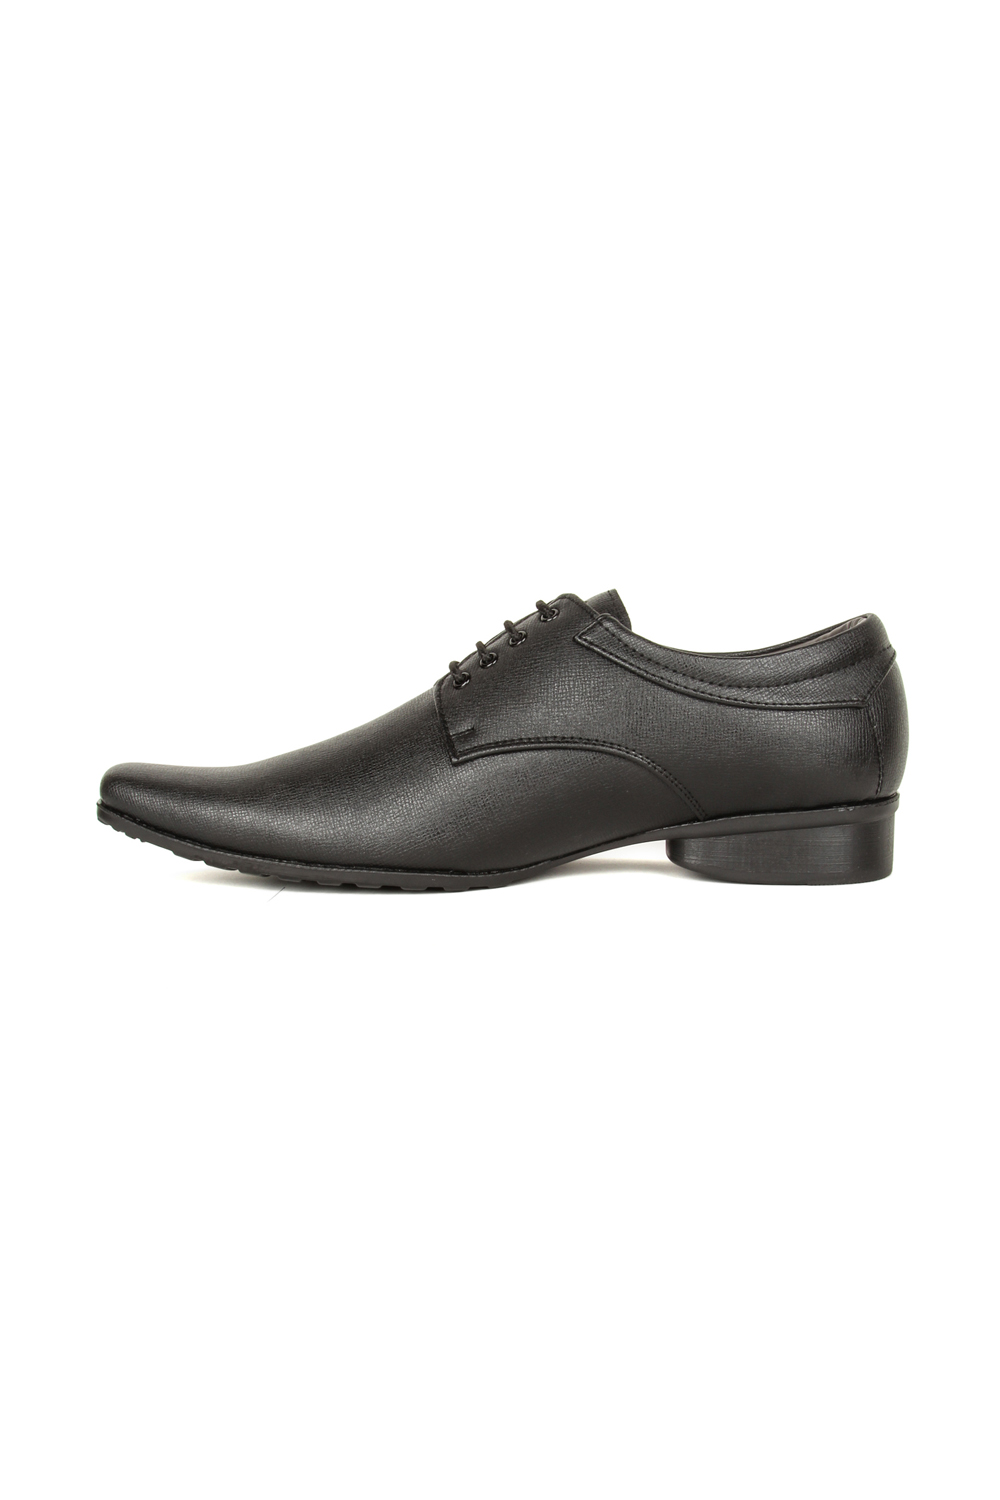 Buy San Frissco Men Black Lace-up Formal Shoes Online @ ₹1995 from ...